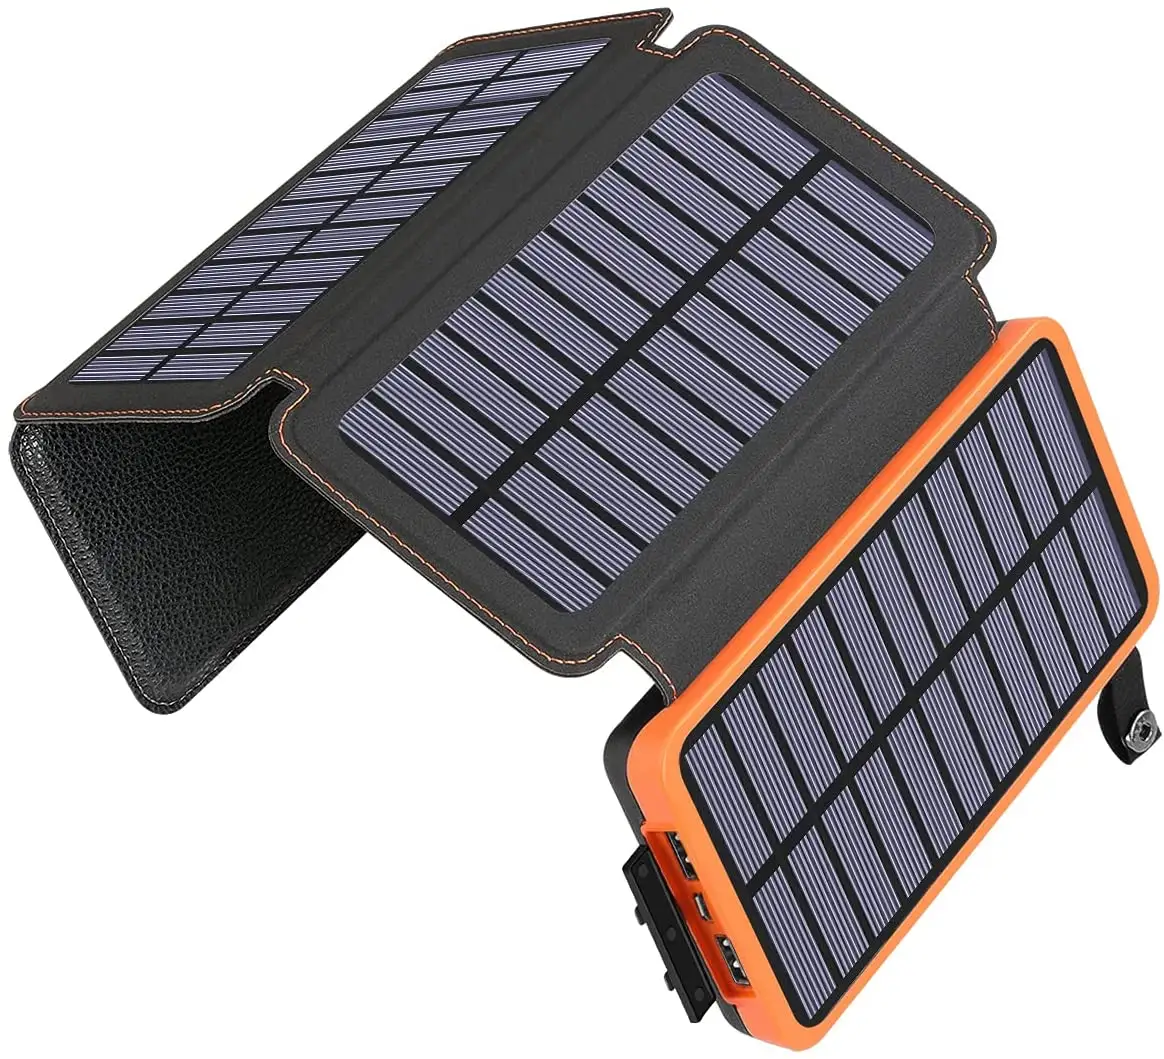 Custom Outdoor power bank solar 20000mah with 3pcs solar panel charger